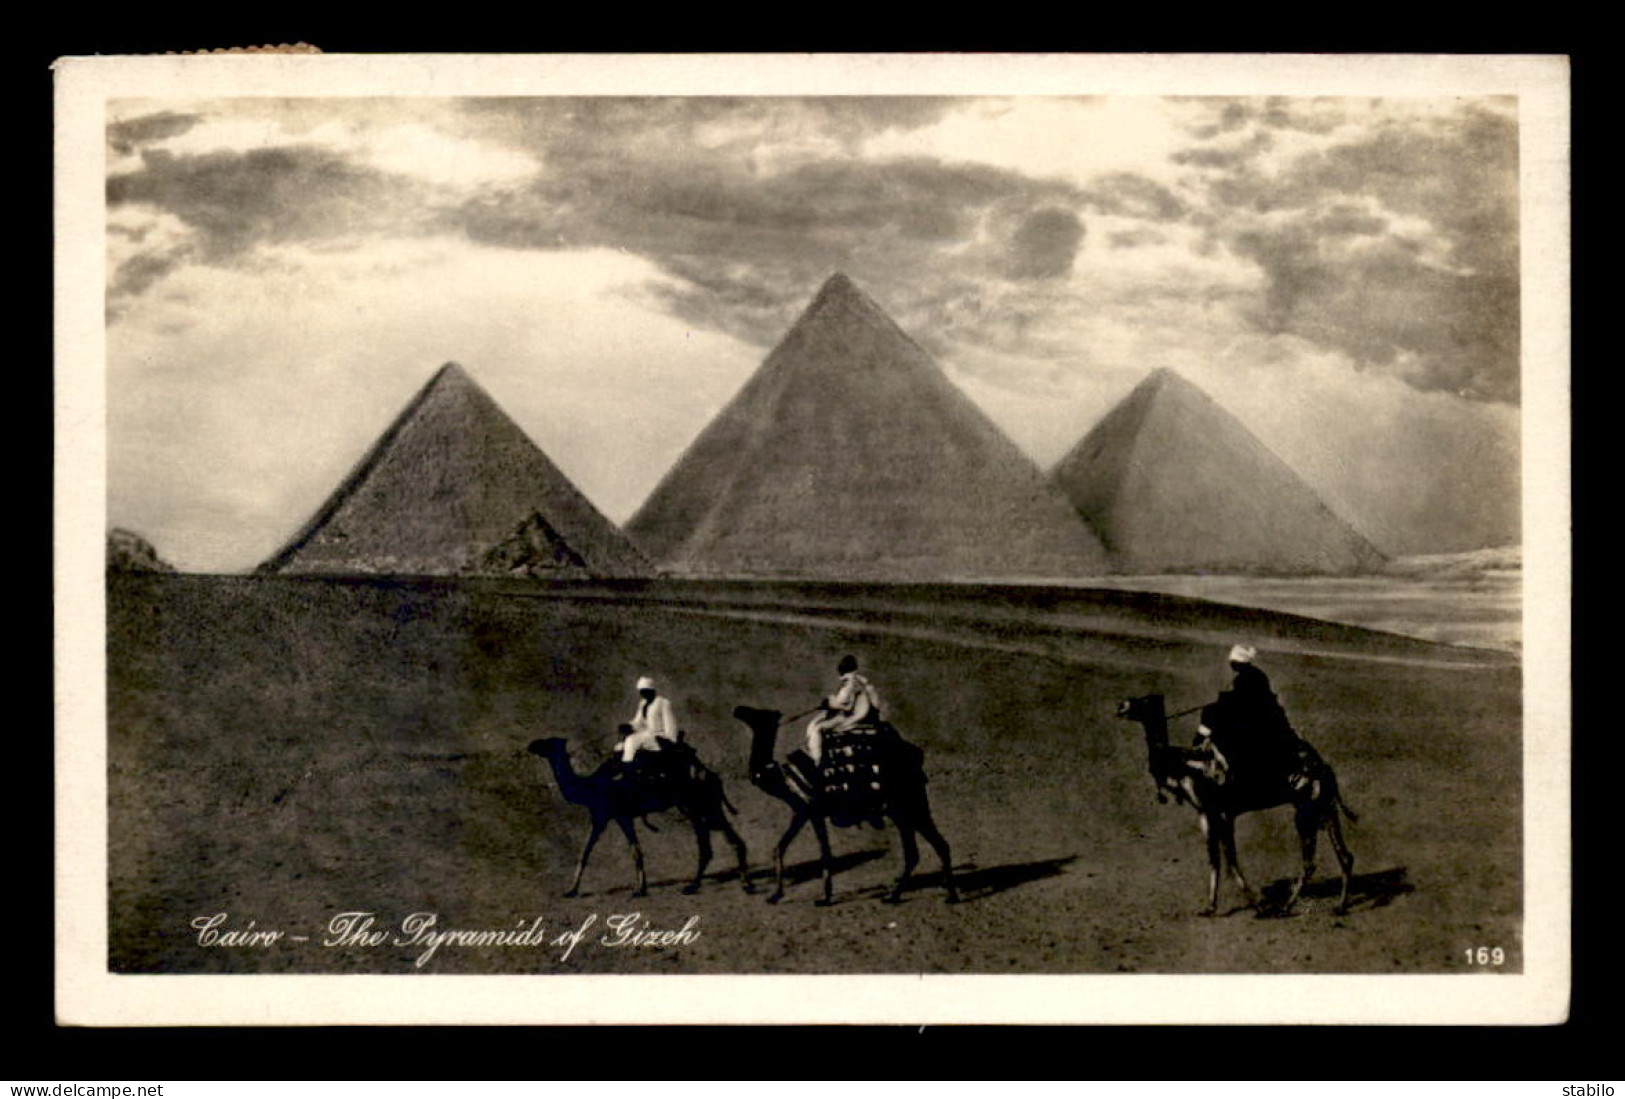 EGYPTE - LENHERT & LANDROCK N°169 - CAIRO - THE PYRAMIDS OF GIZEH - CHAMEAUX - Kairo